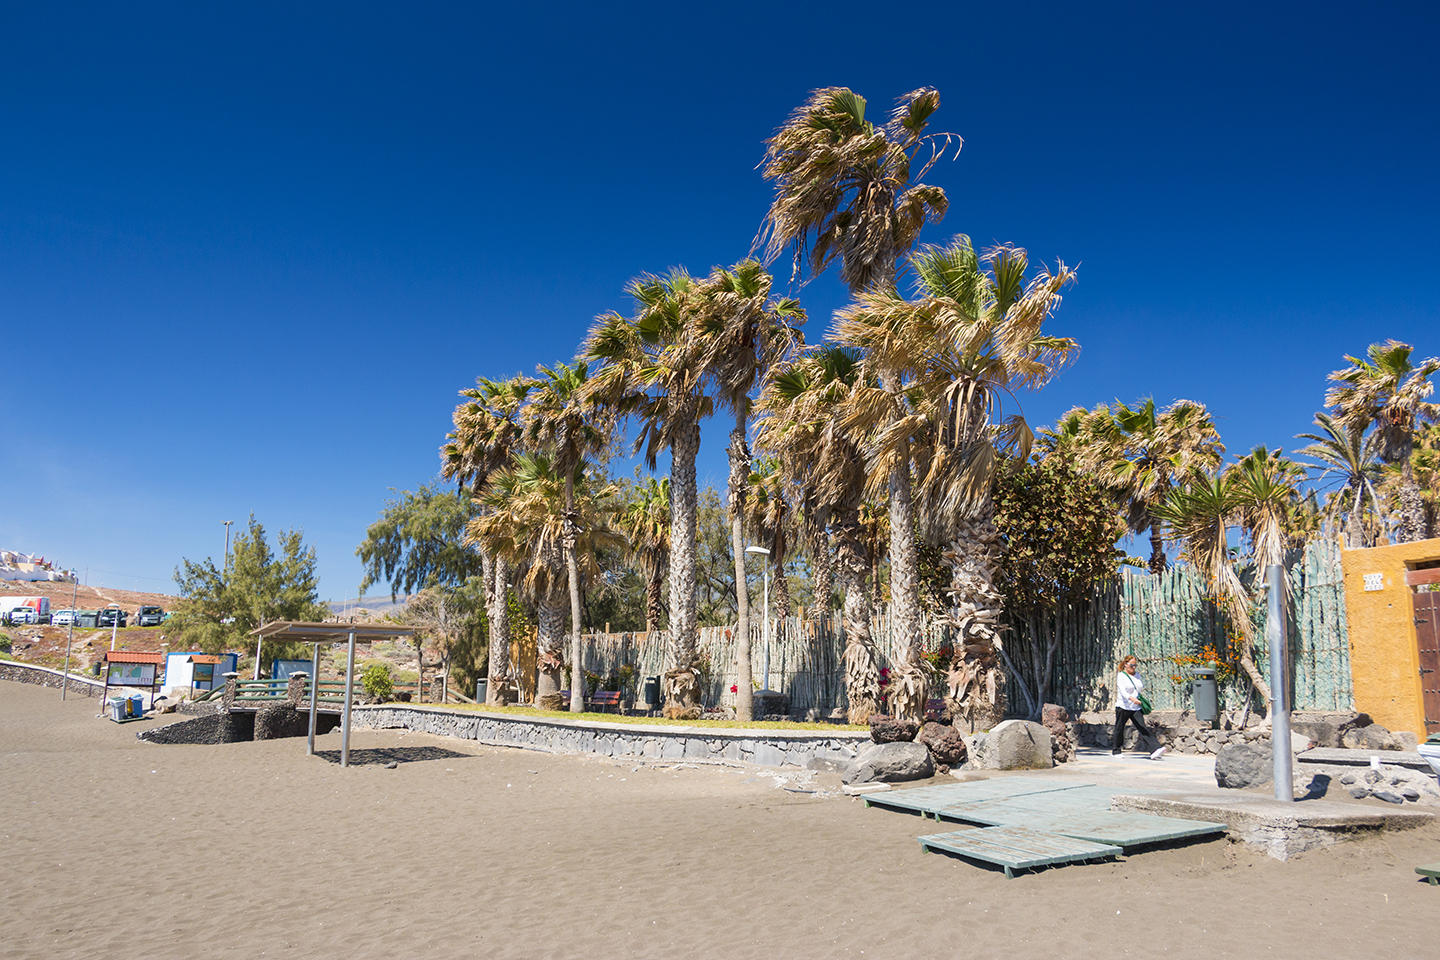 Hoya del Pozo beach with palm trees